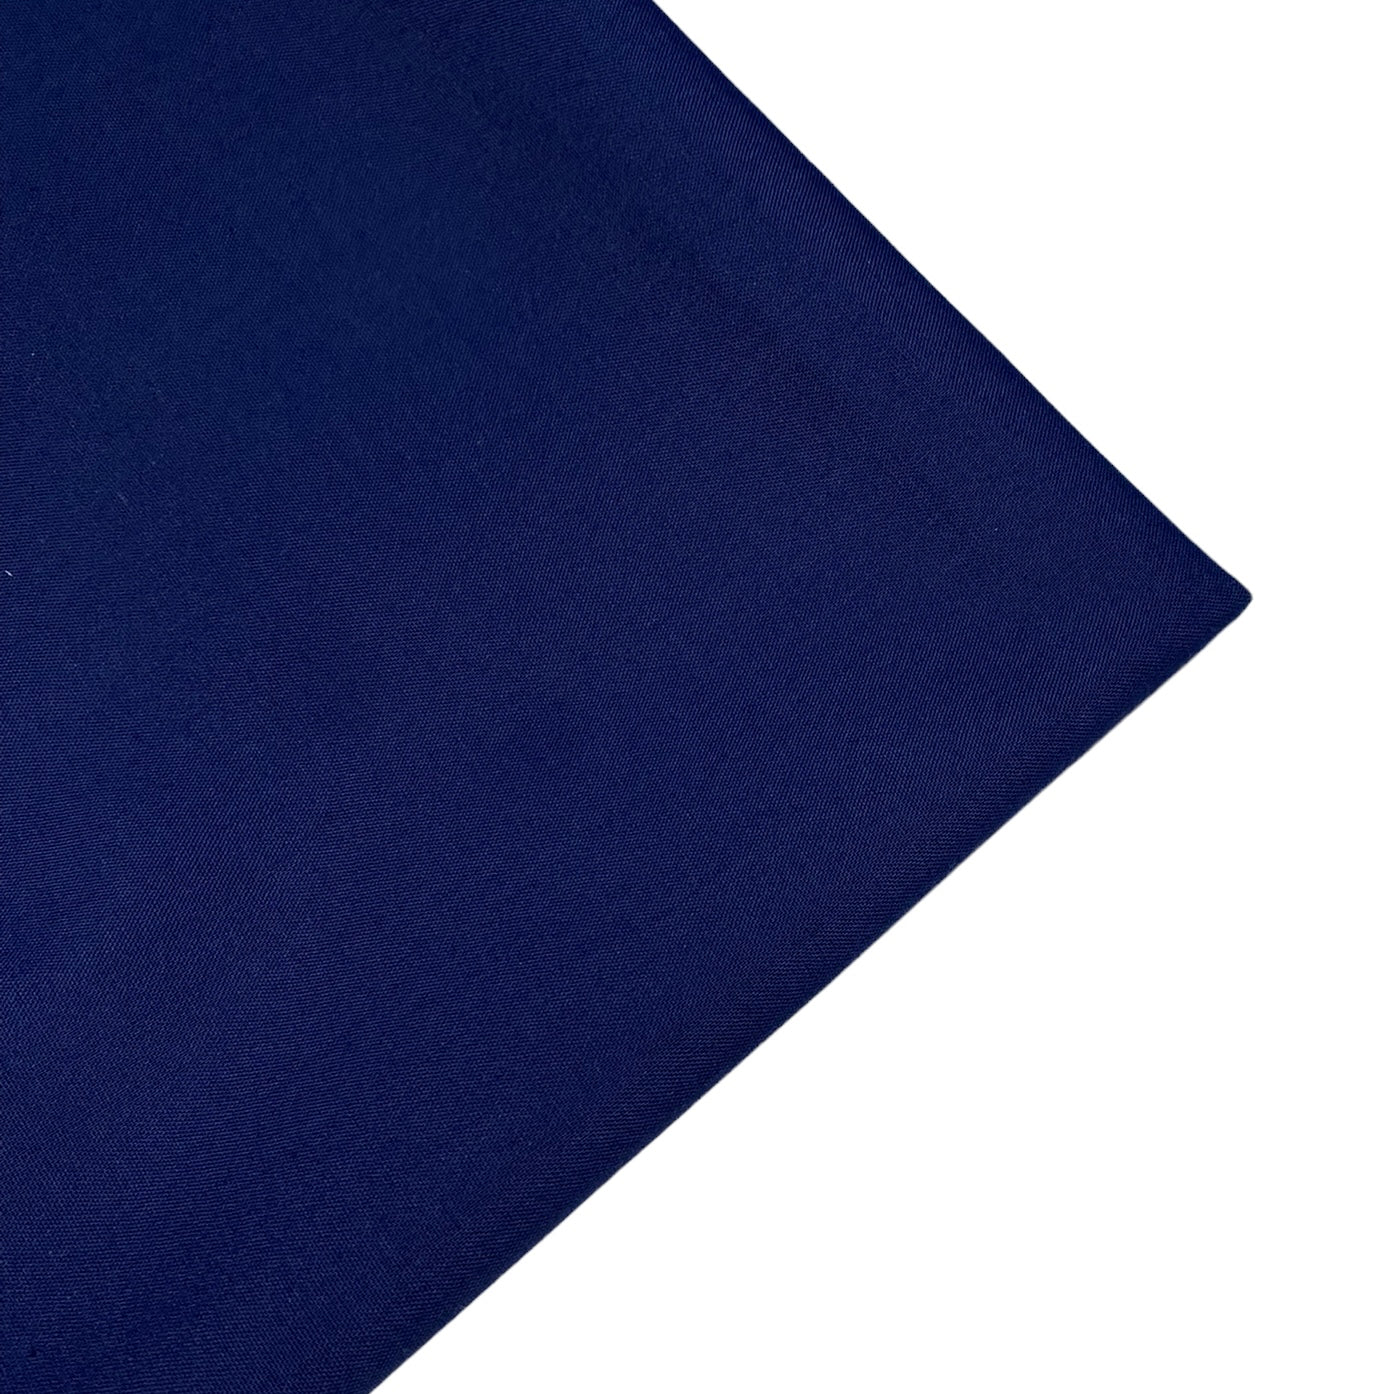 Poly/Cotton Broadcloth 44” - Purple